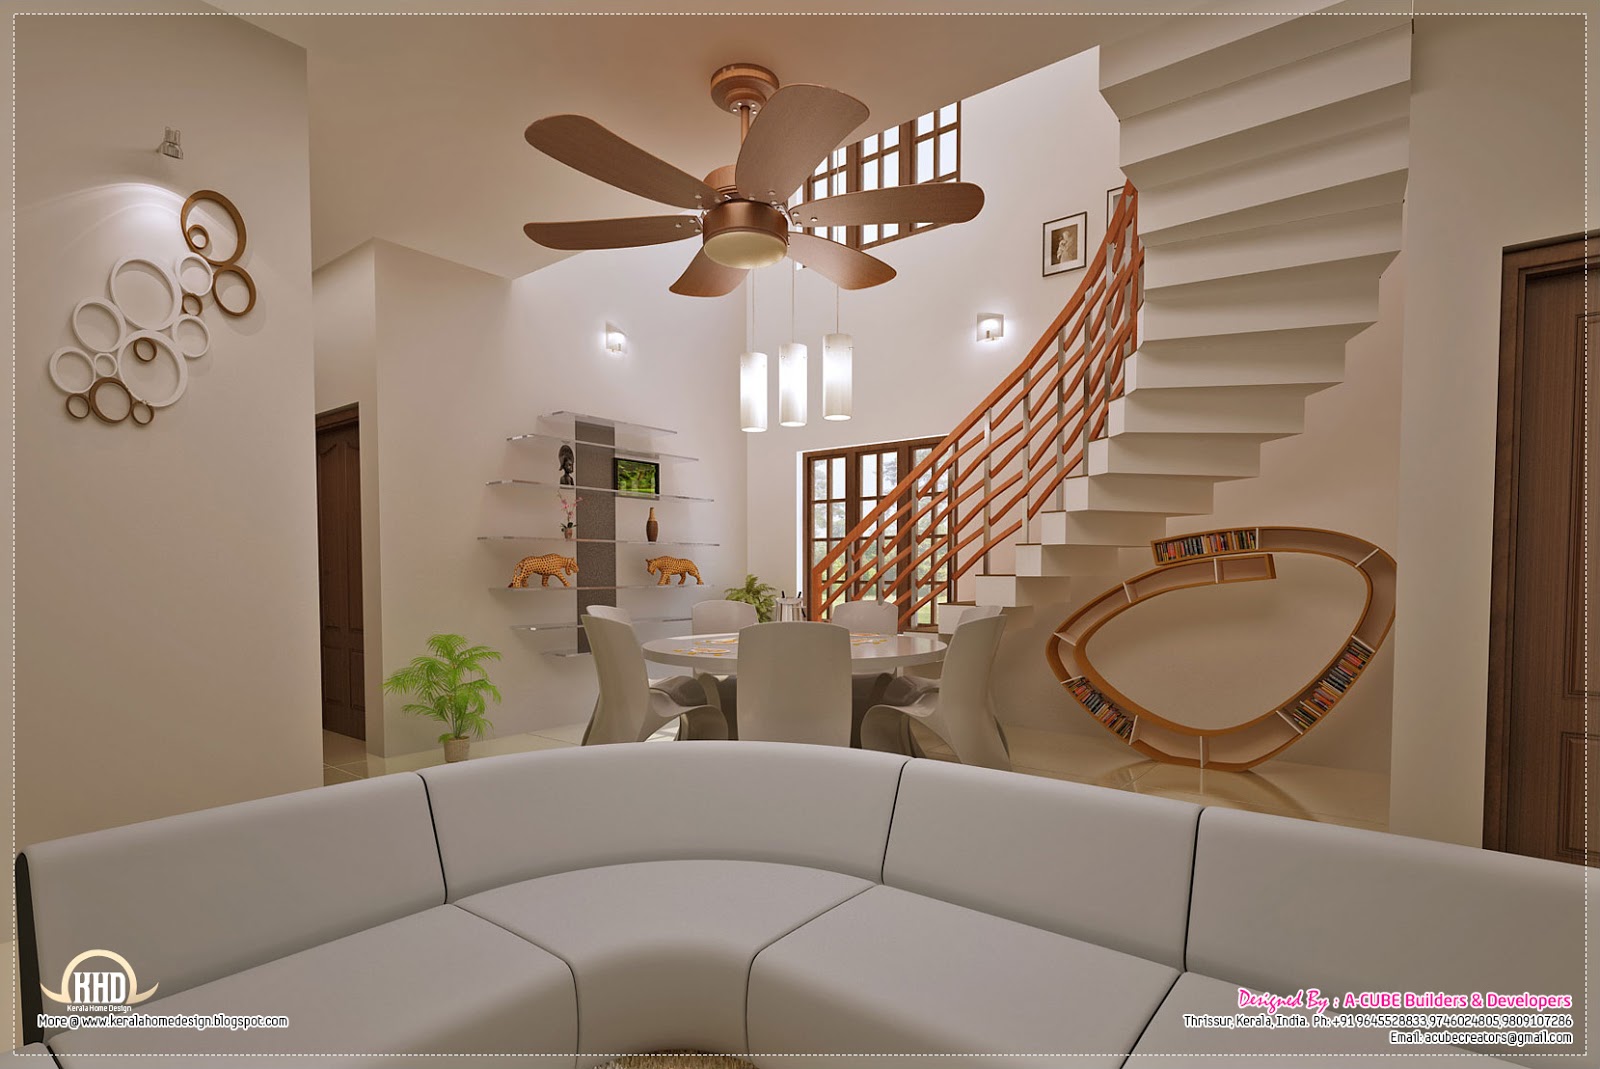 Awesome interior decoration ideas - Kerala home design and floor plans  ... interior Stair design interior